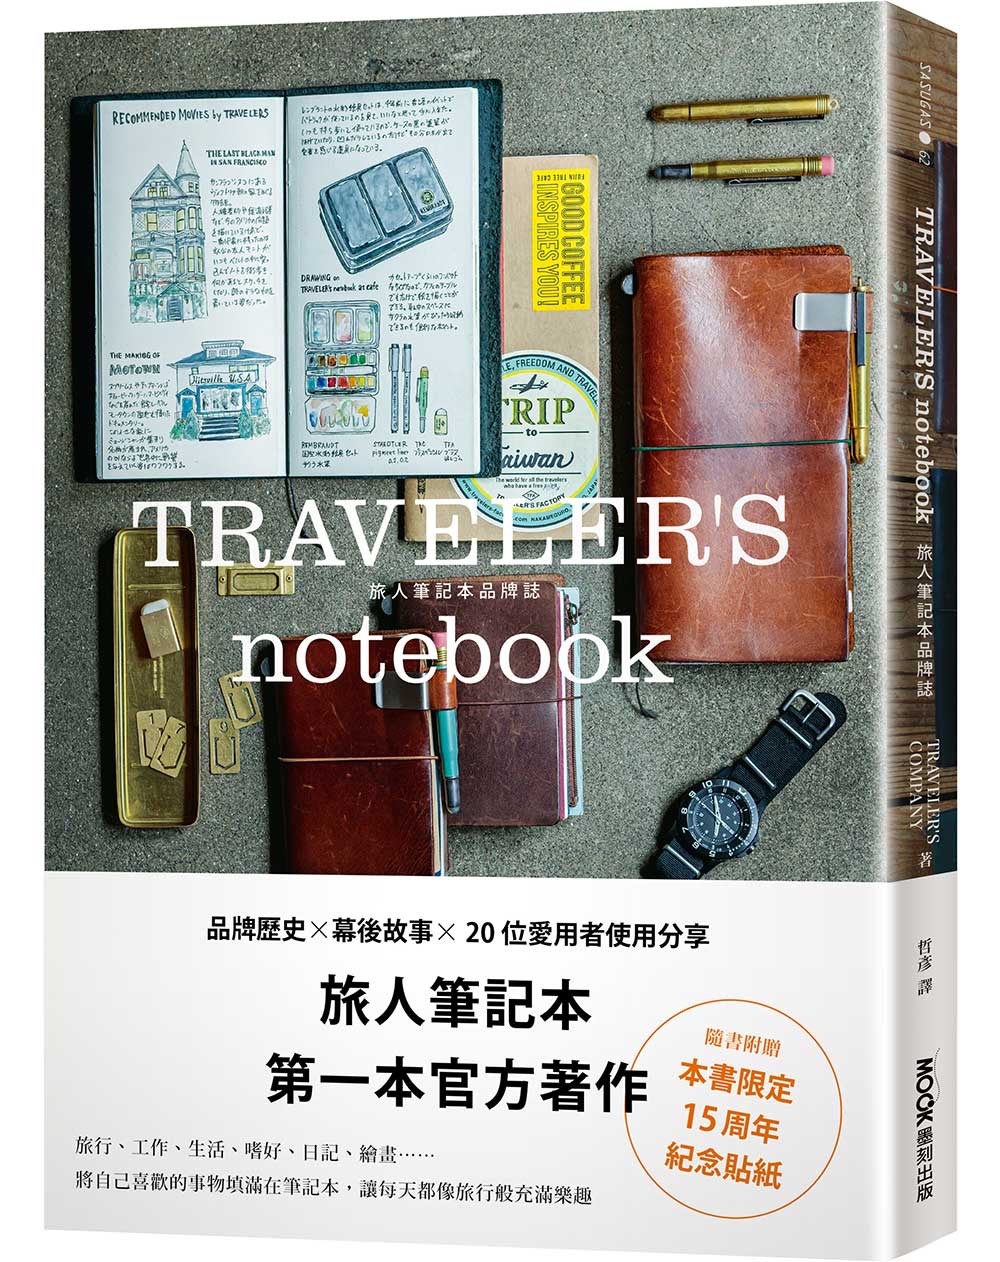 TRAVELER'S notebook旅人筆記本品牌誌